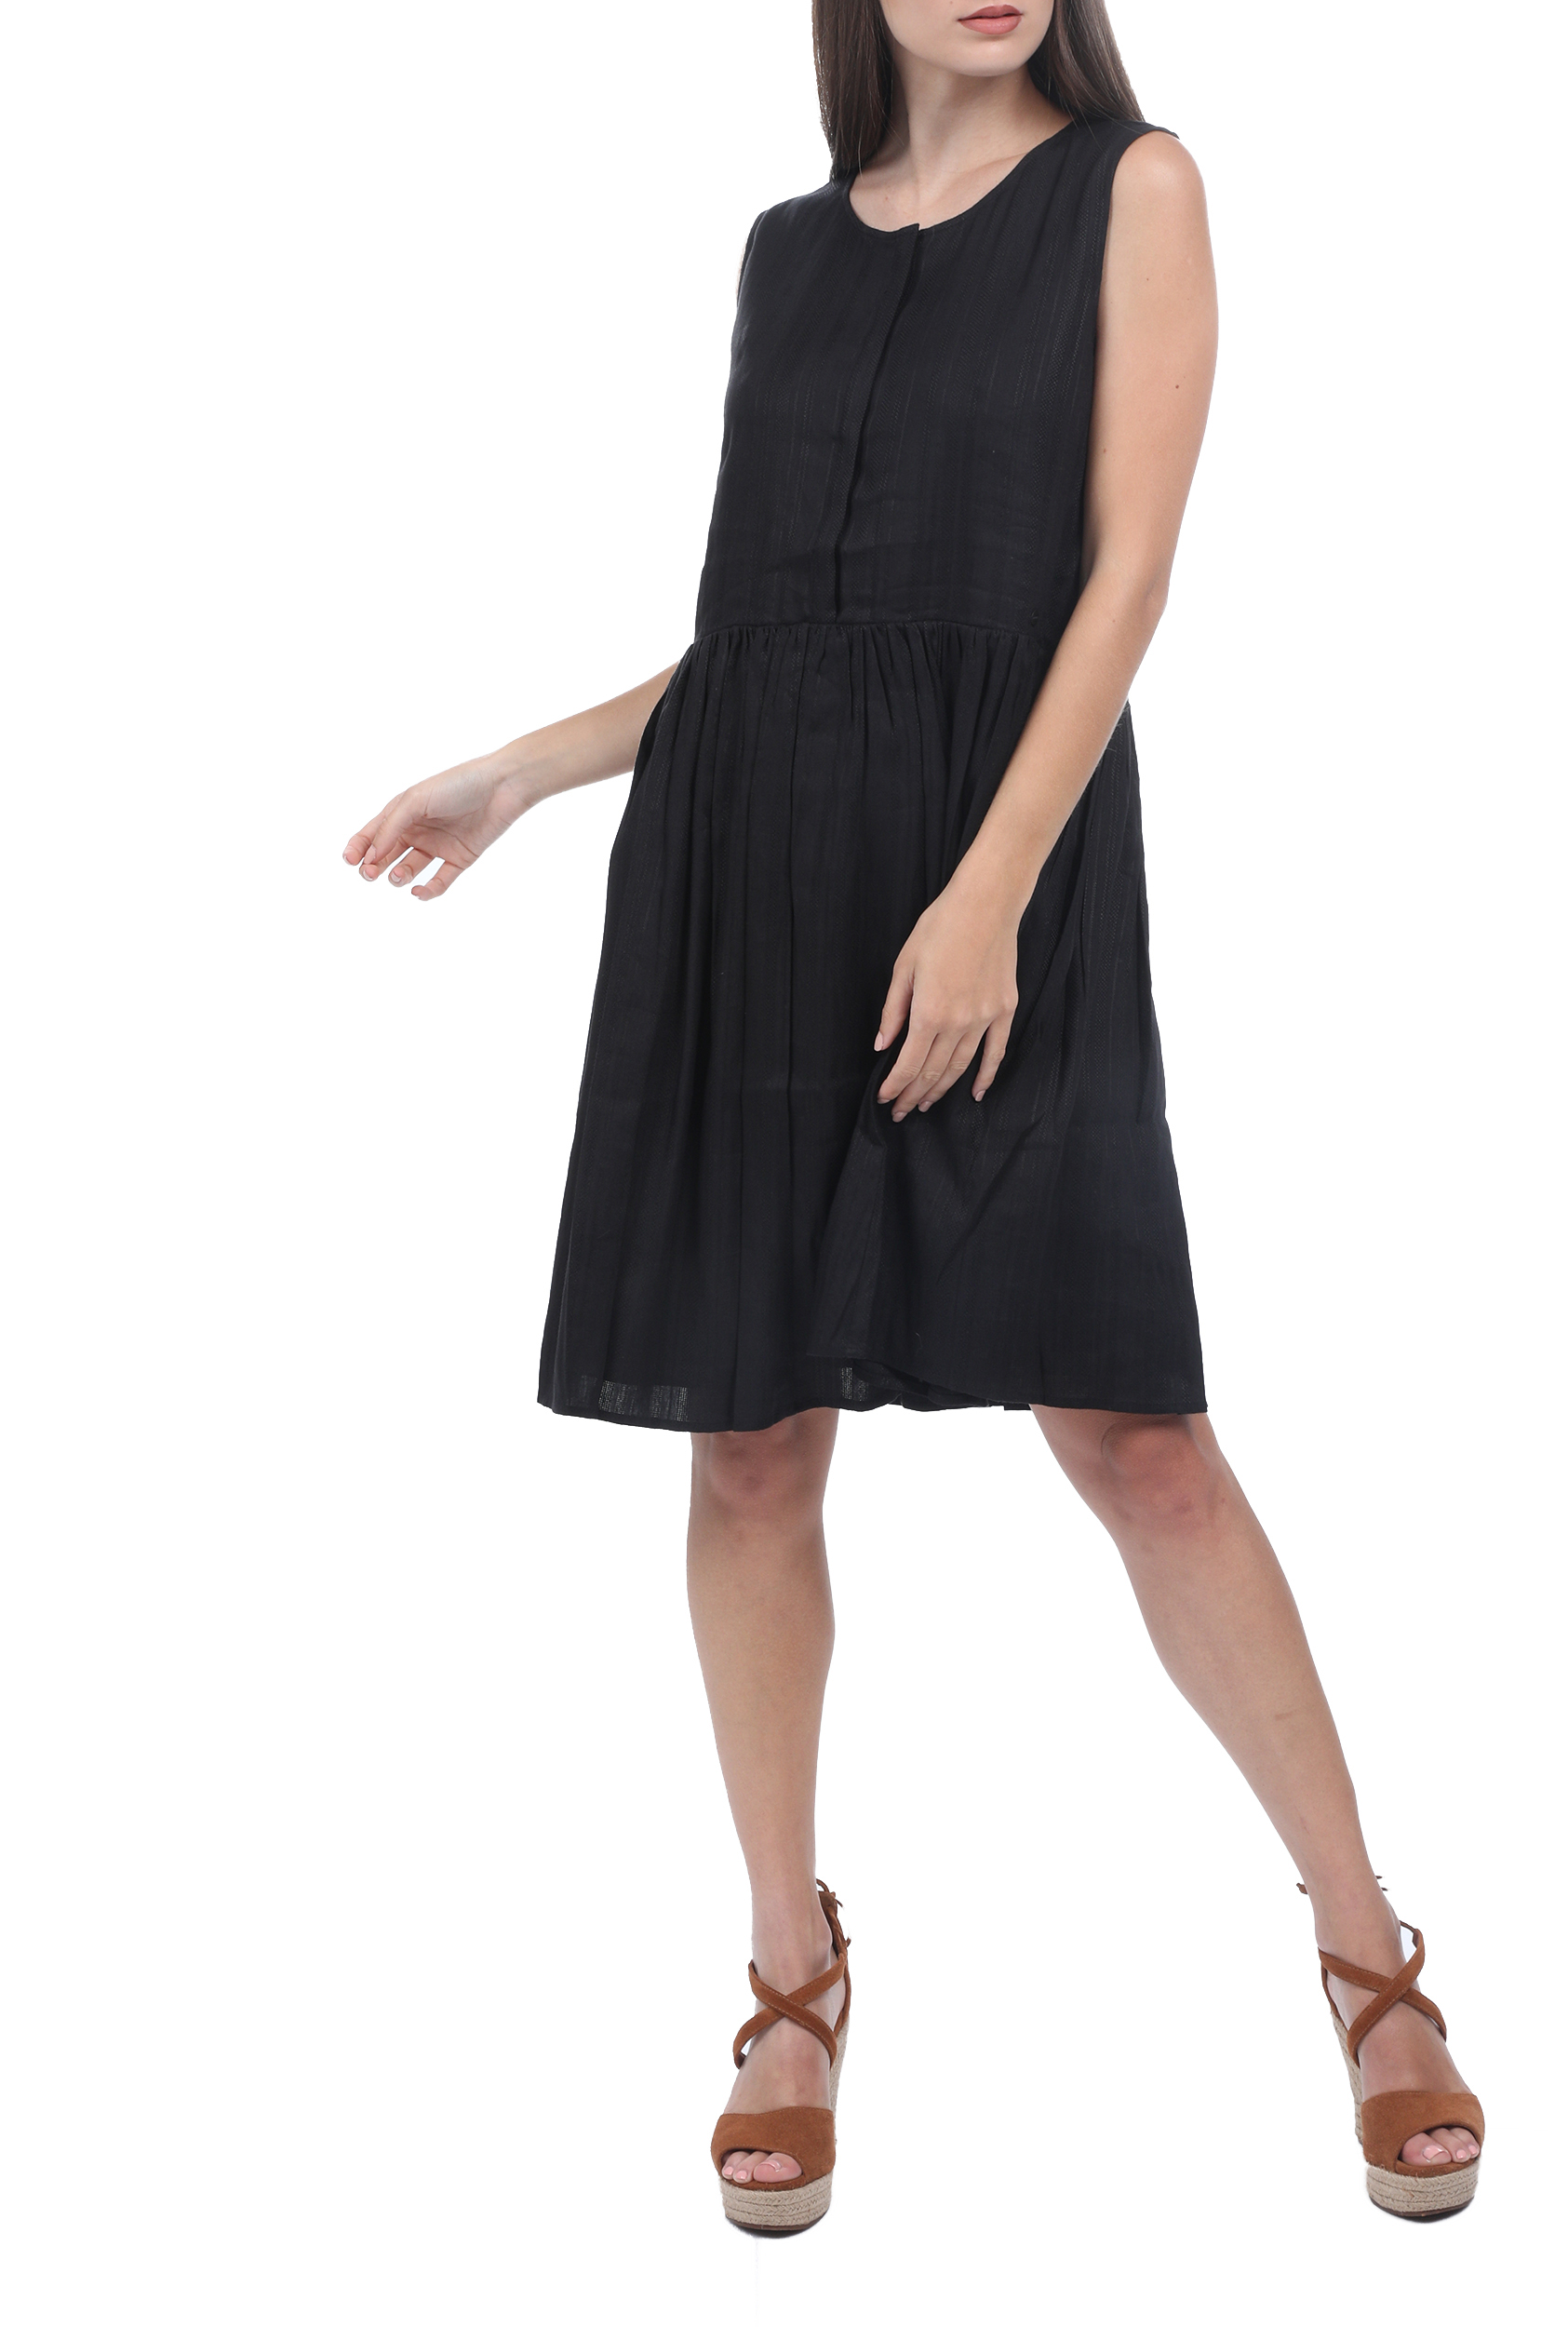 SUPERDRY – Γυναικείο φόρεμα SUPERDRY TEXTURED DAY DRESS μαύρο 1809703.0-7171